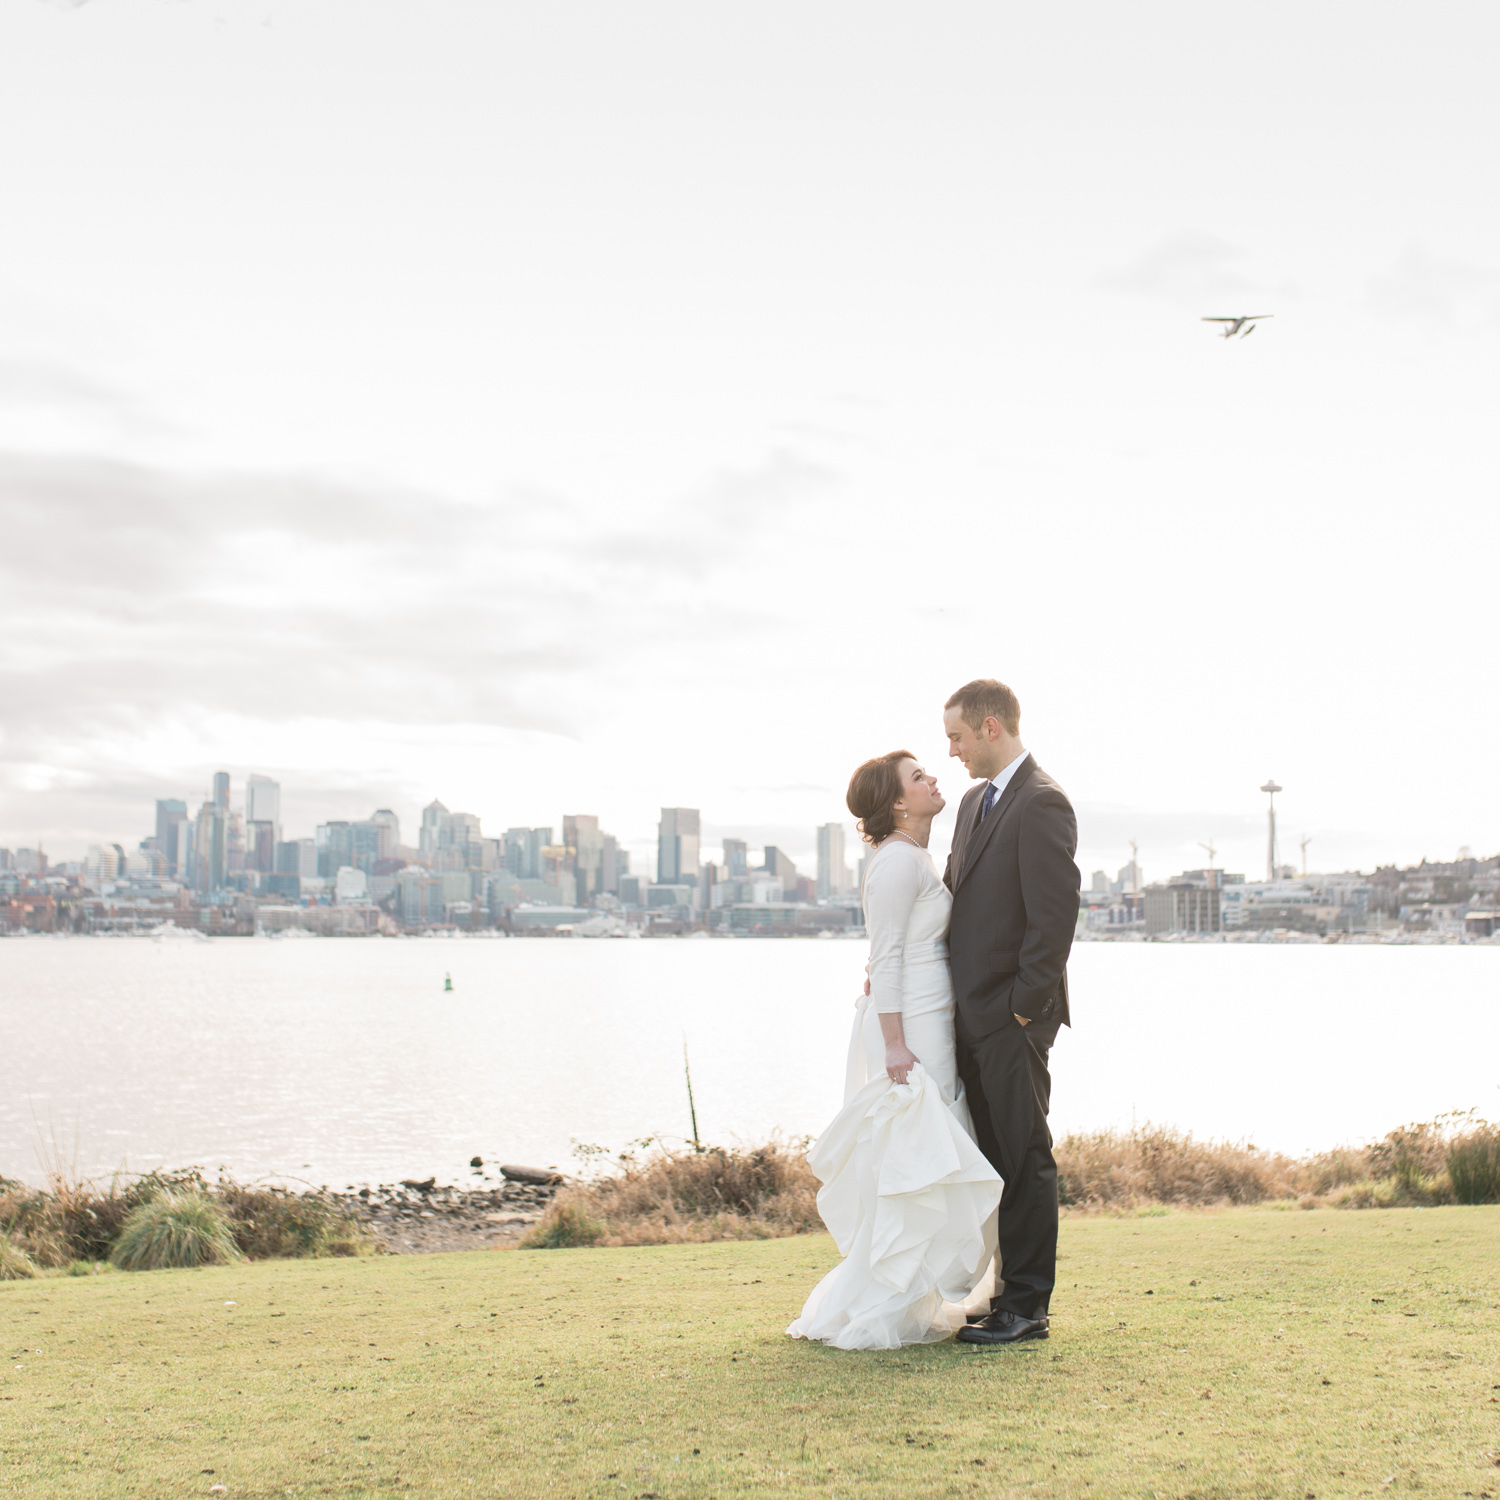 Seattle Skyline wedding photos at Gas Works Park, Seattle,Wa